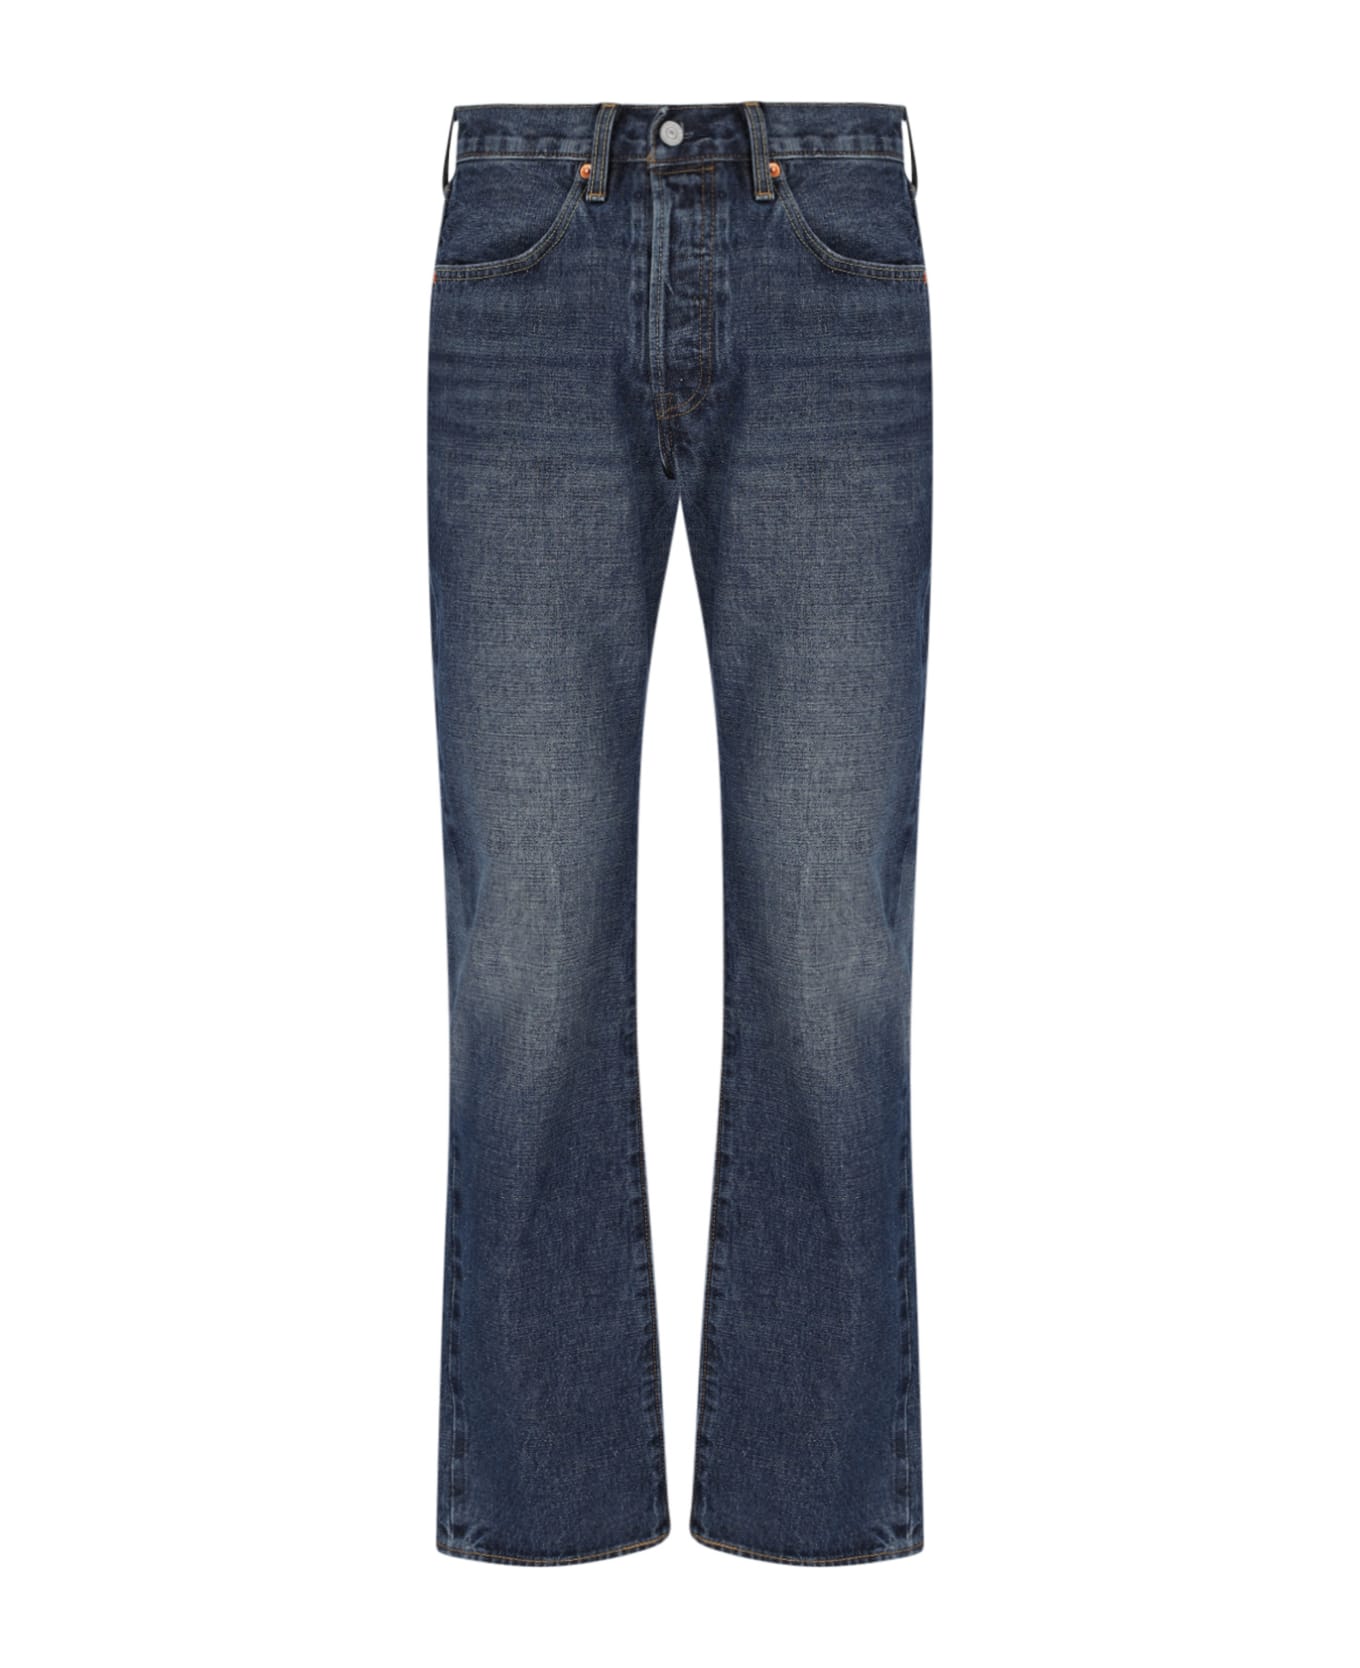 Levi's "501" Straight Jeans - Blue